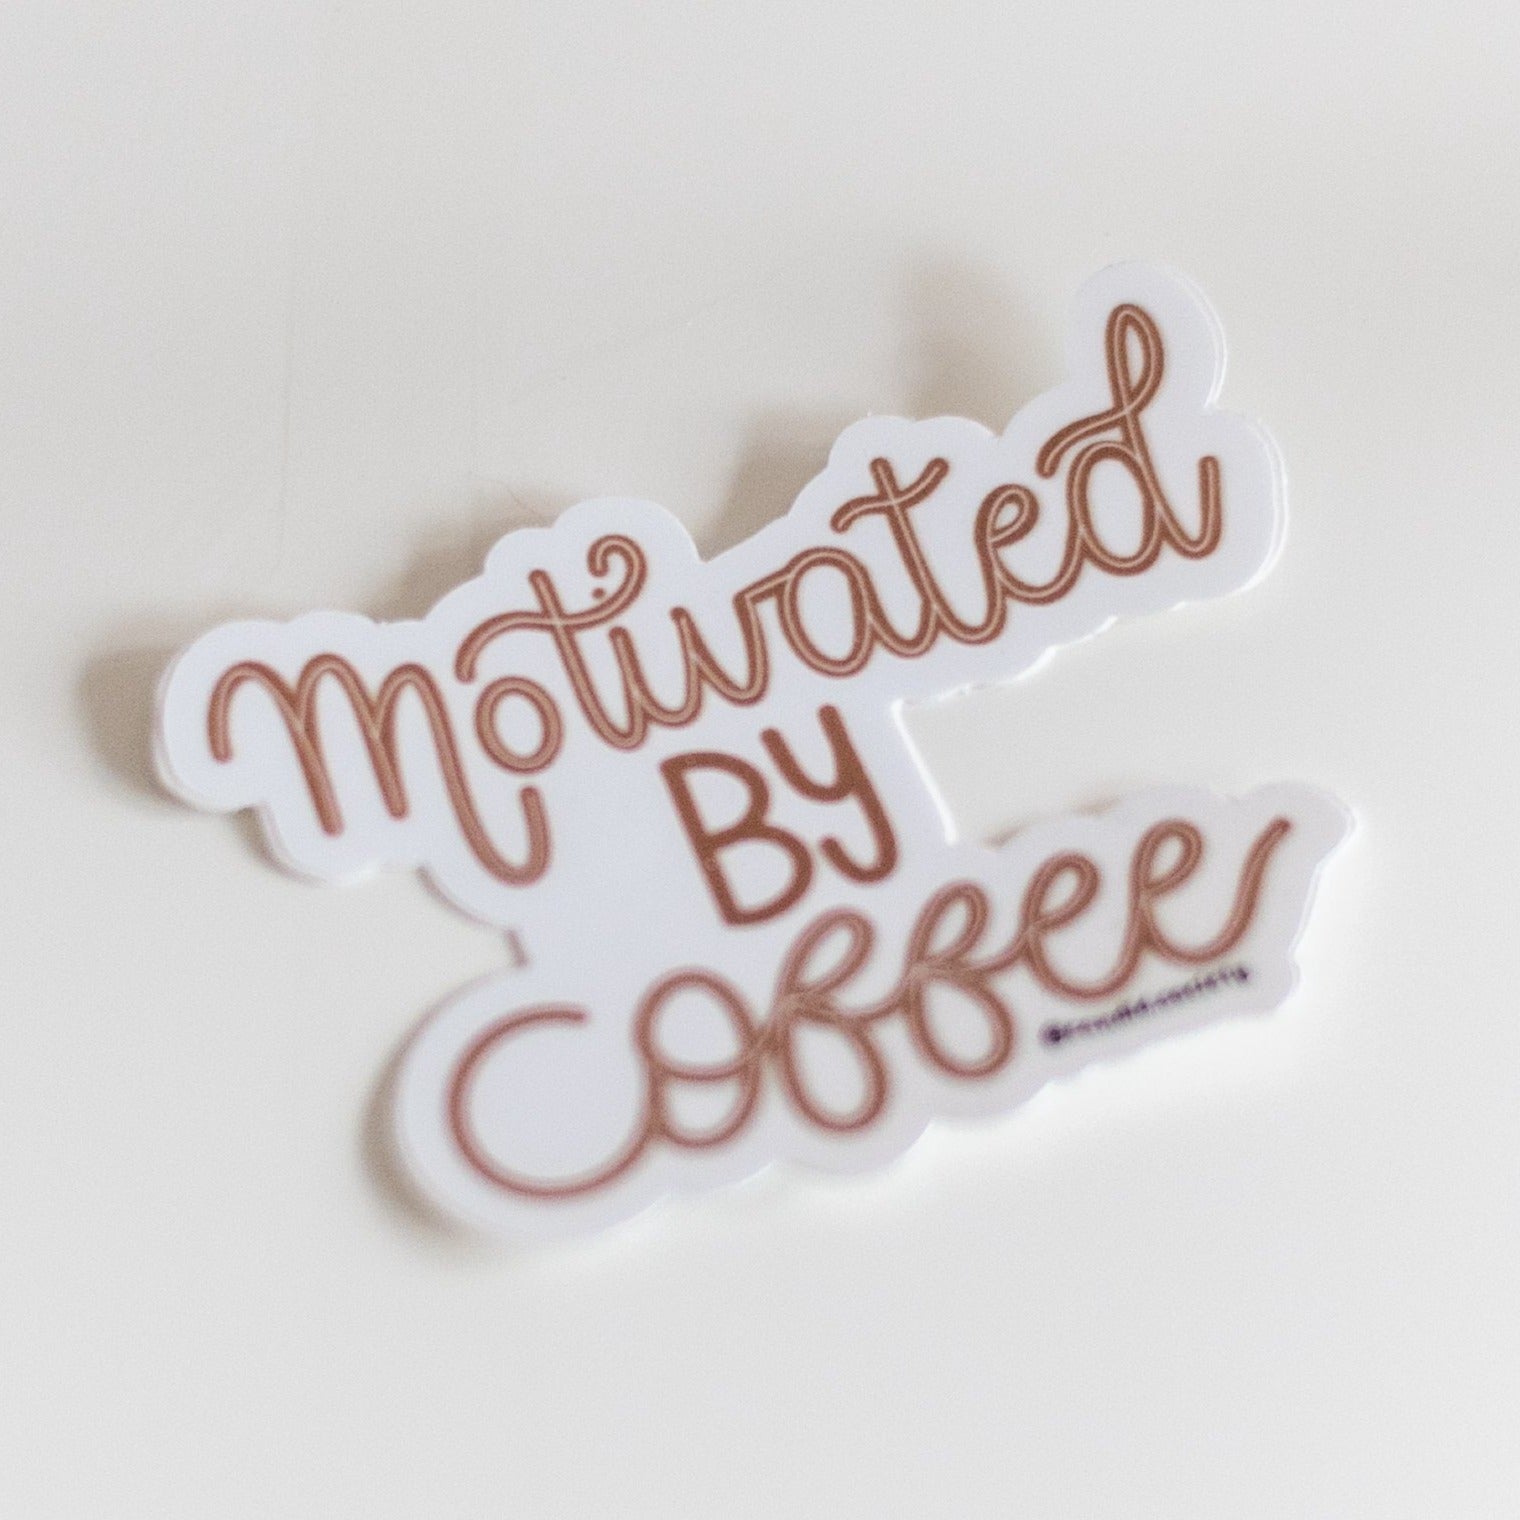 90 - Motivated by Coffee - Premium Sticker